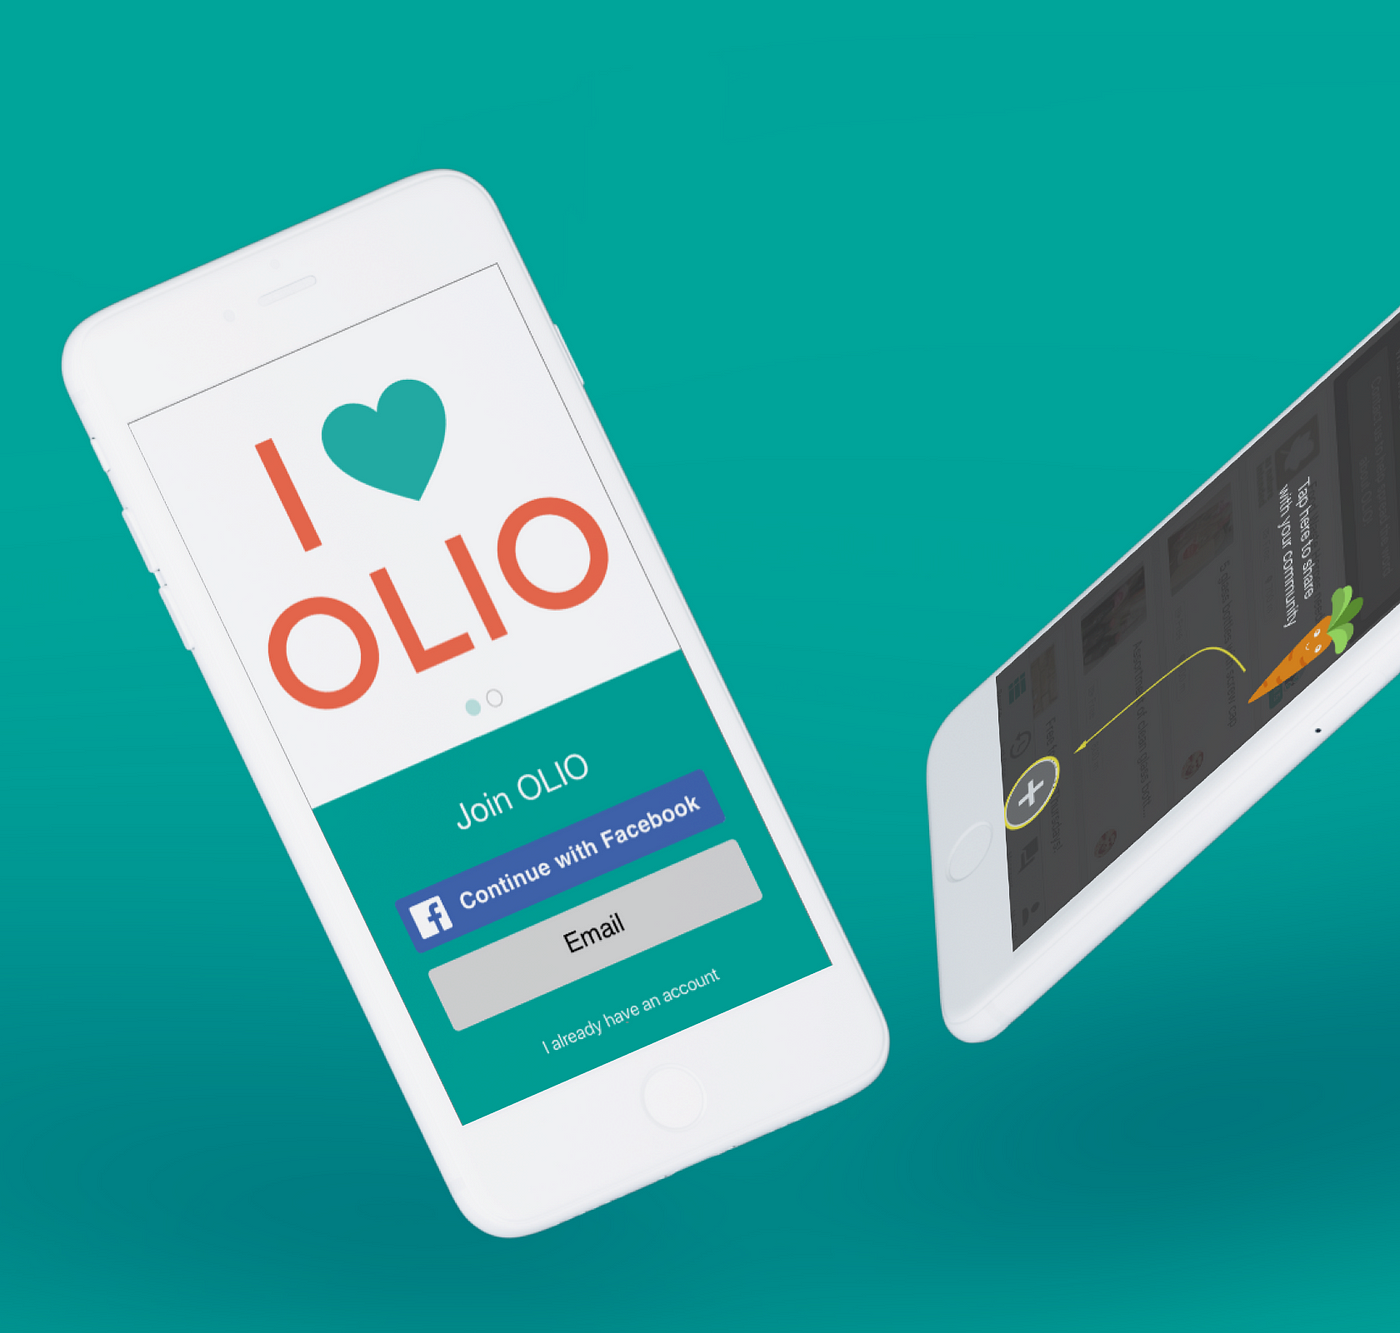 OLIO app Onboarding Experience & Item Listing Redesign. | by Estelle JIN |  Medium